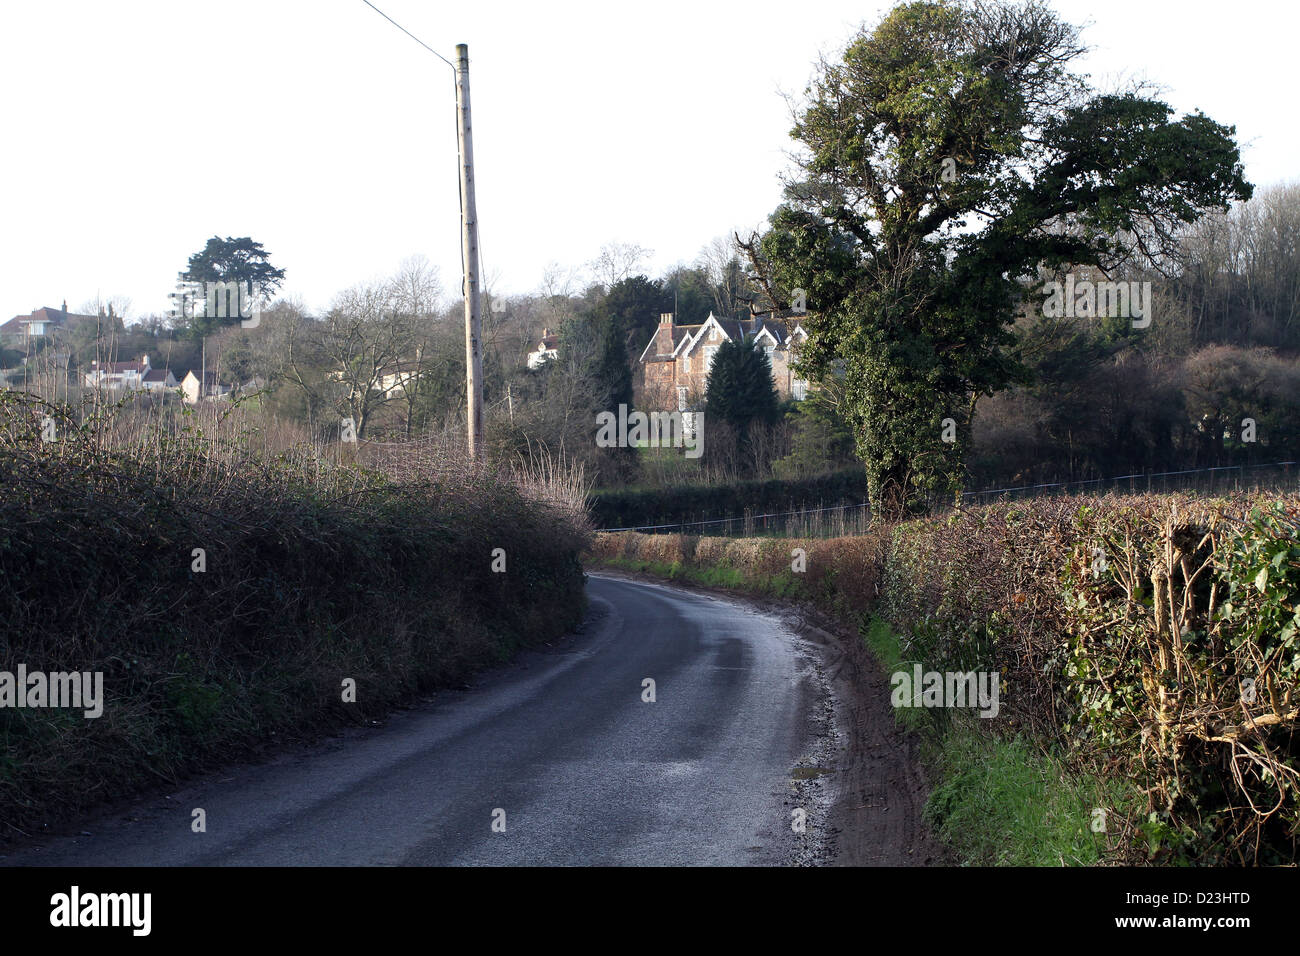 Bend in a dangerous rural road, near Bleadon, Weston super Mare, North Somerset, England, UK Stock Photo